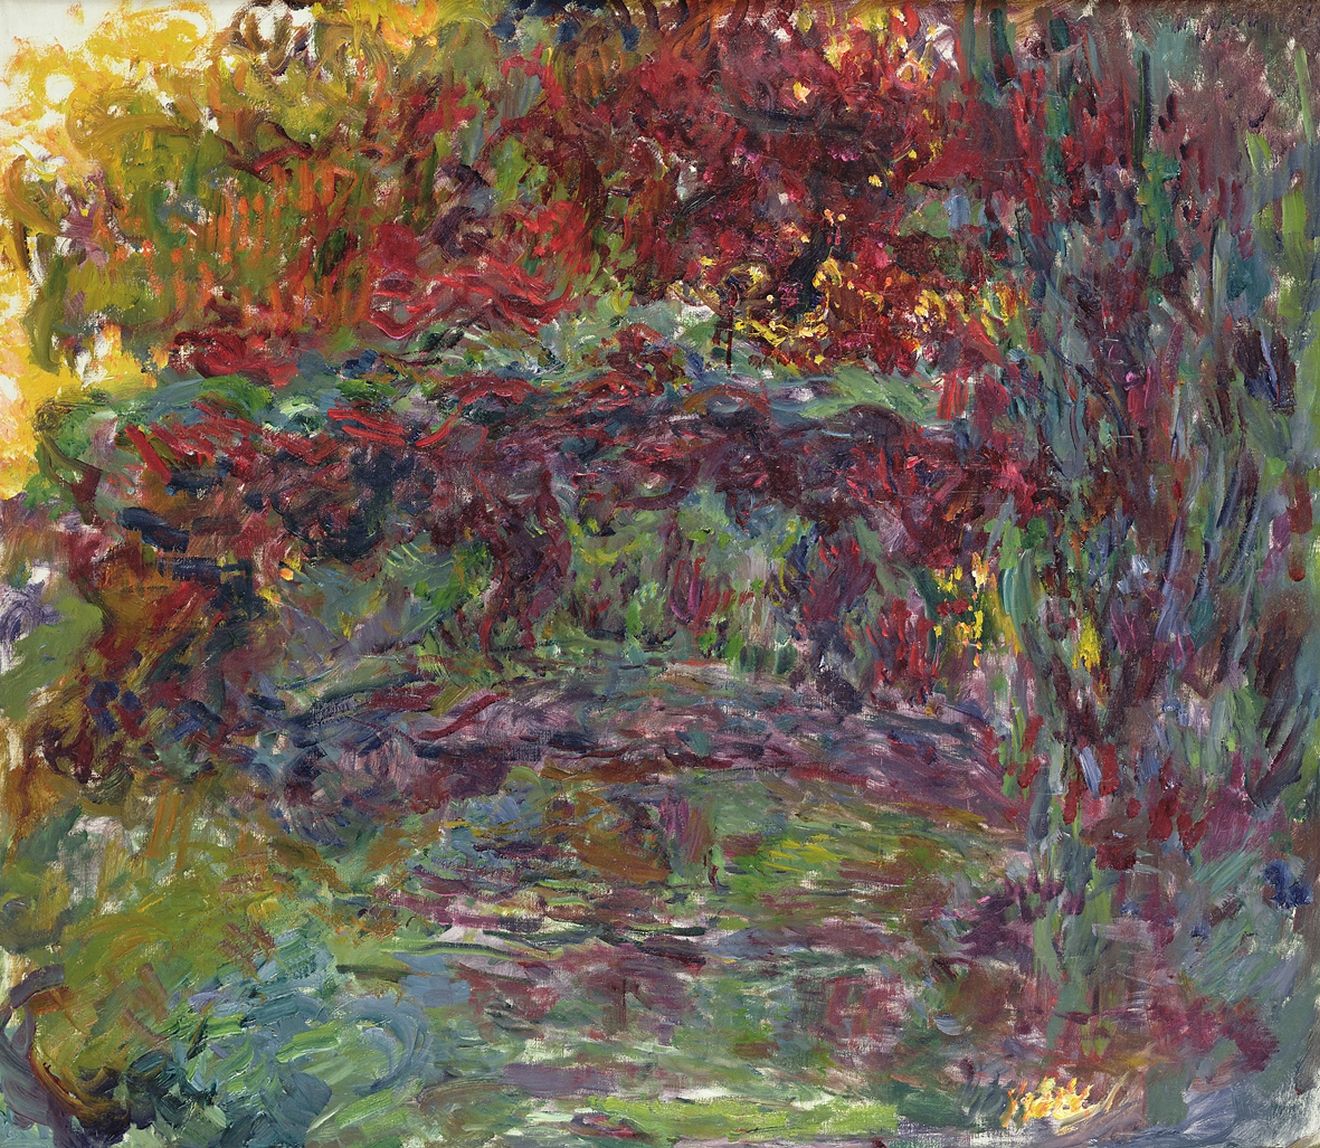 Claude+Monet-1840-1926 (460).jpg